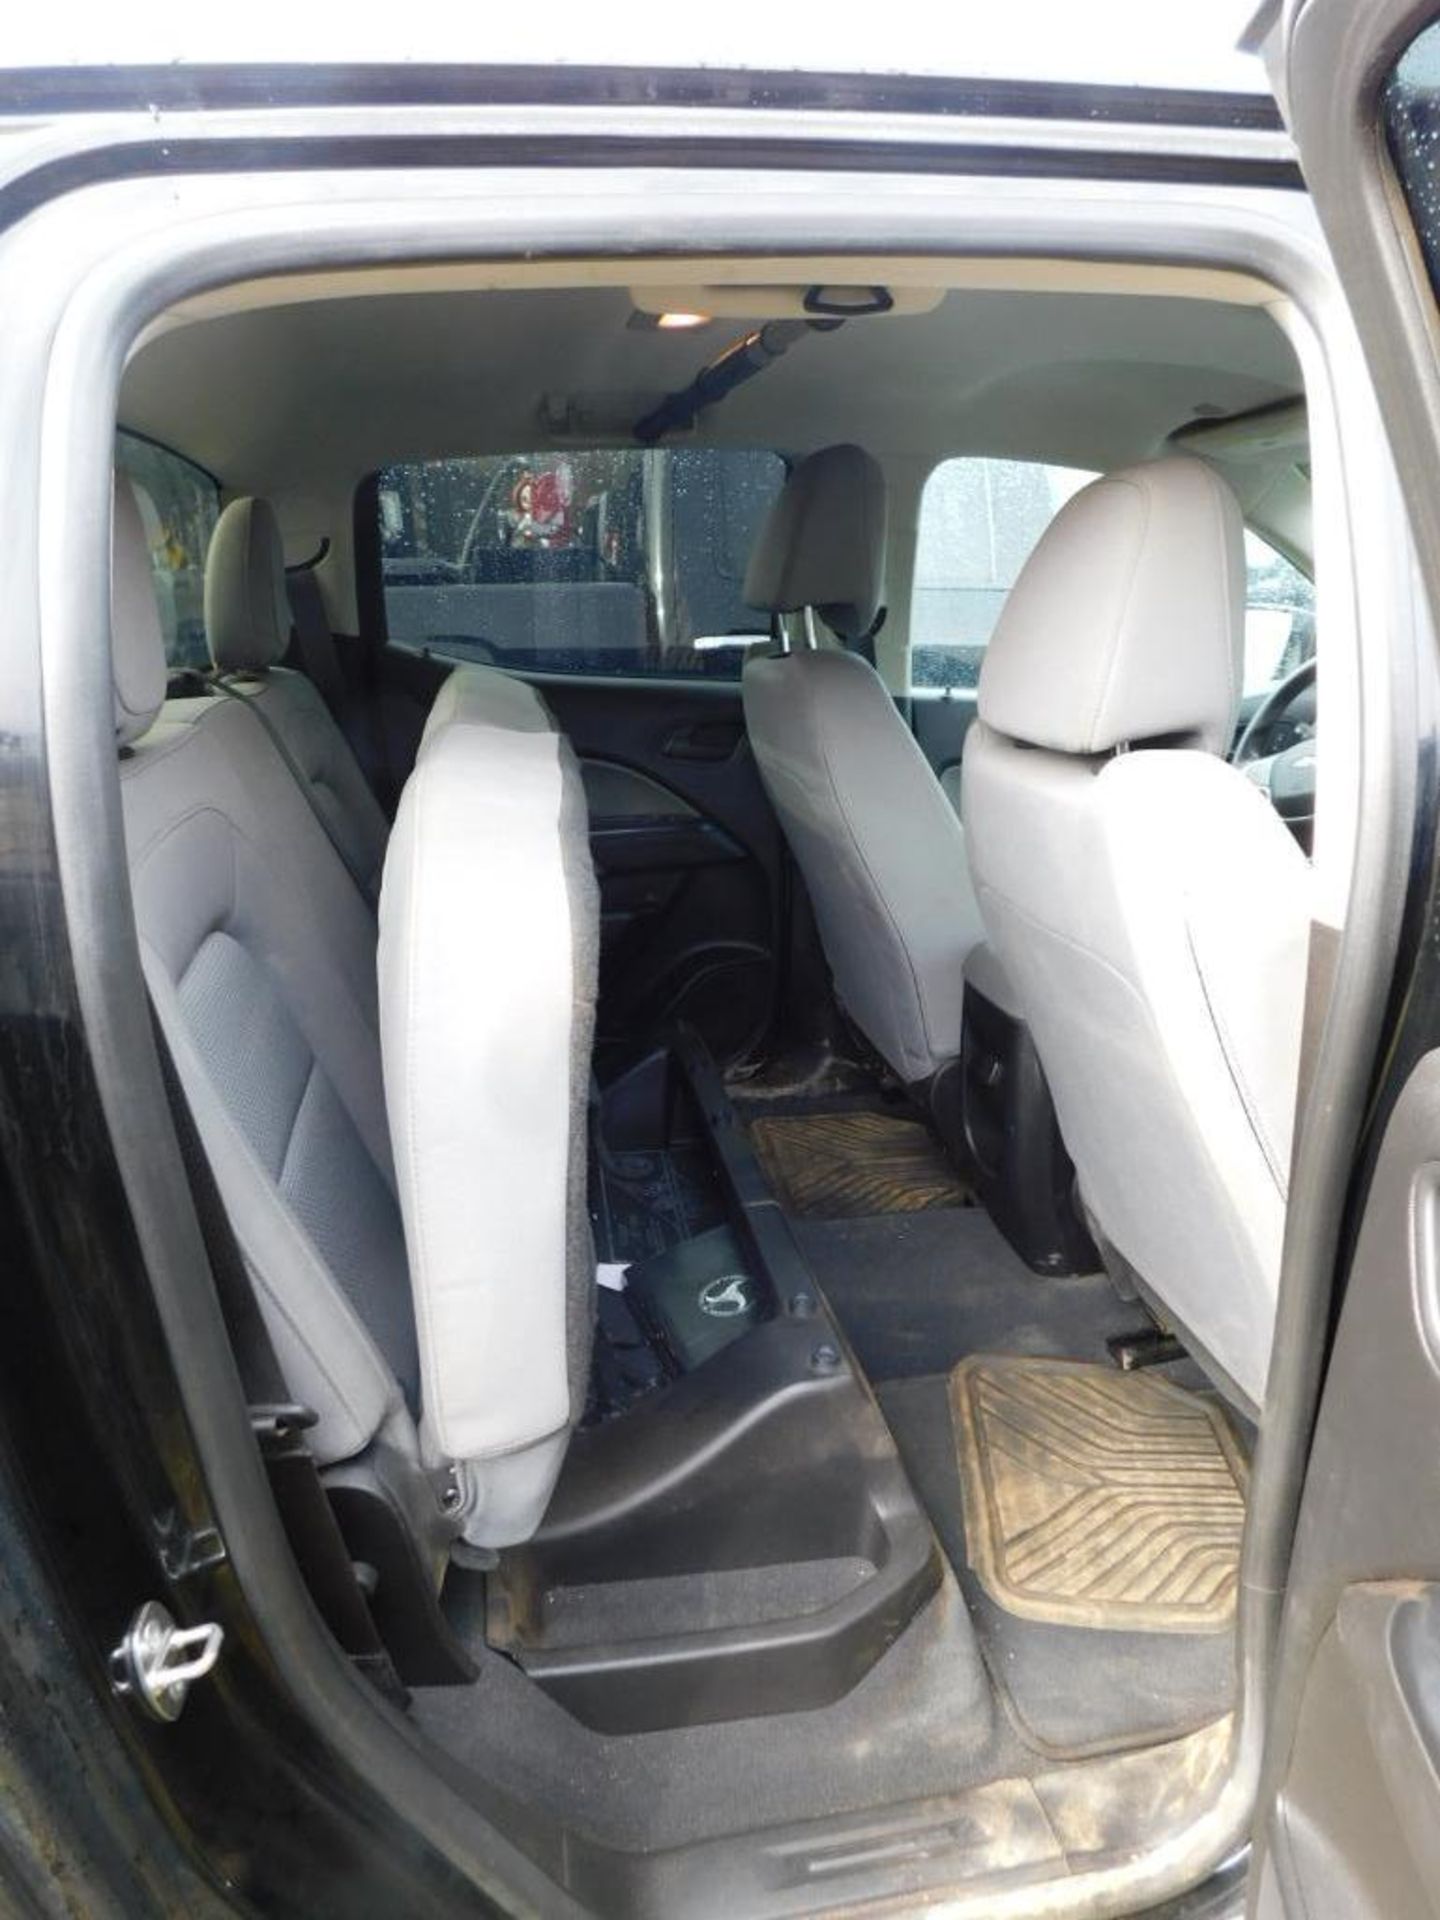 2019 Chevy Colorado Crew Cab, 4-Wheel Drive, 3.6 Liter, V6, Gasoline Motor, Auto, 5' Bed, 87,741 Mil - Image 10 of 11